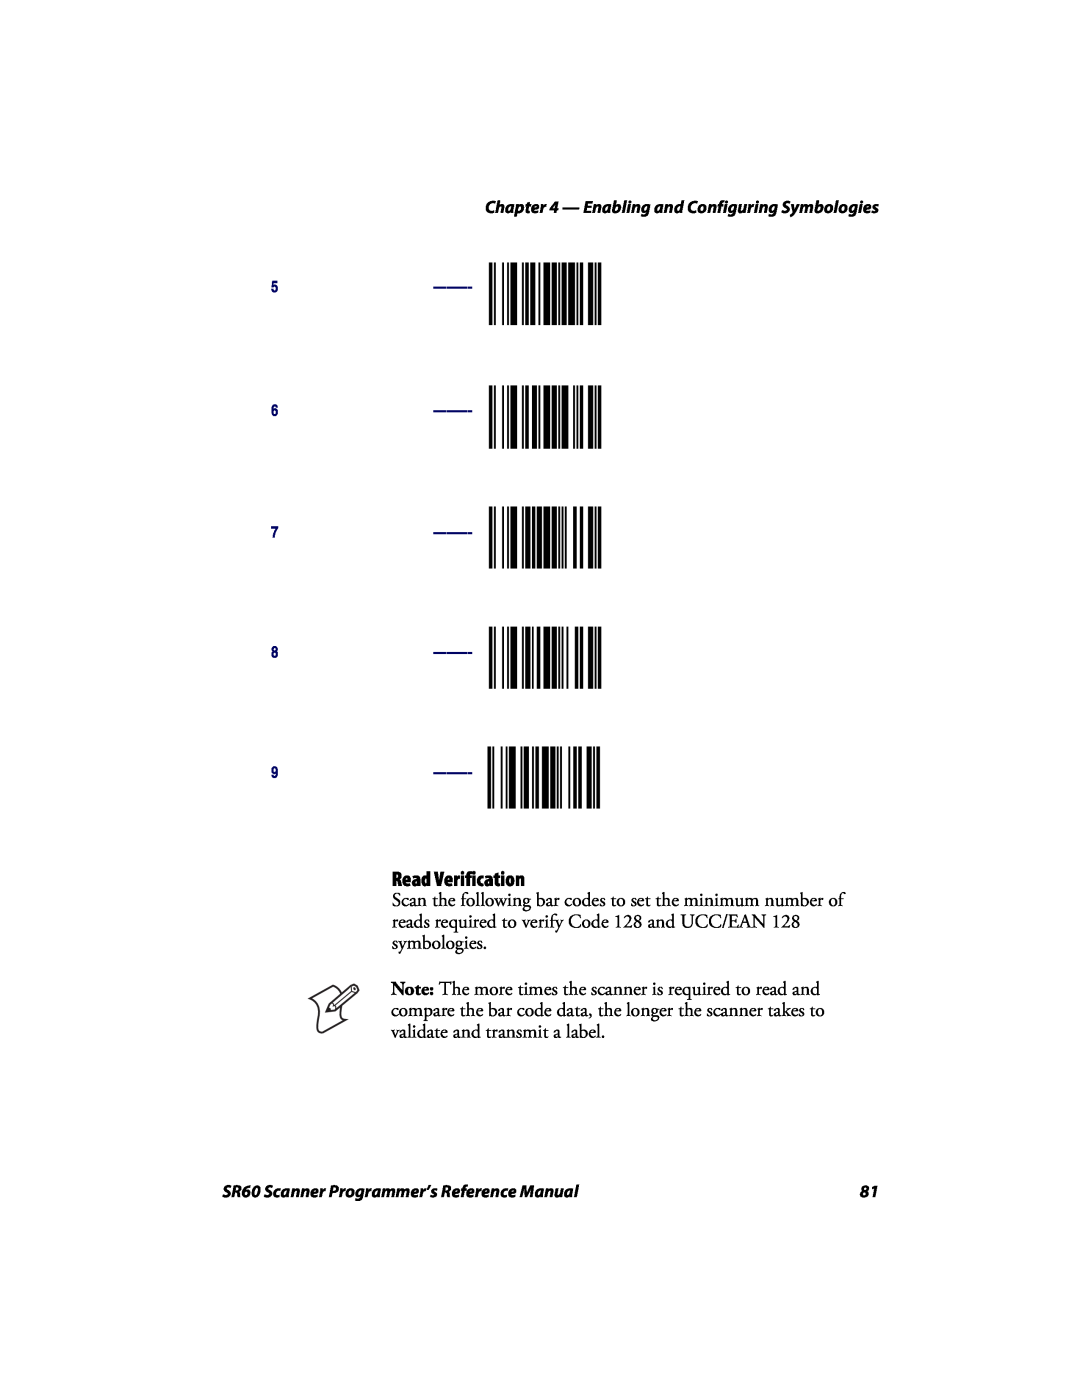 Intermec manual Read Verification, Enabling and Configuring Symbologies, SR60 Scanner Programmer’s Reference Manual 